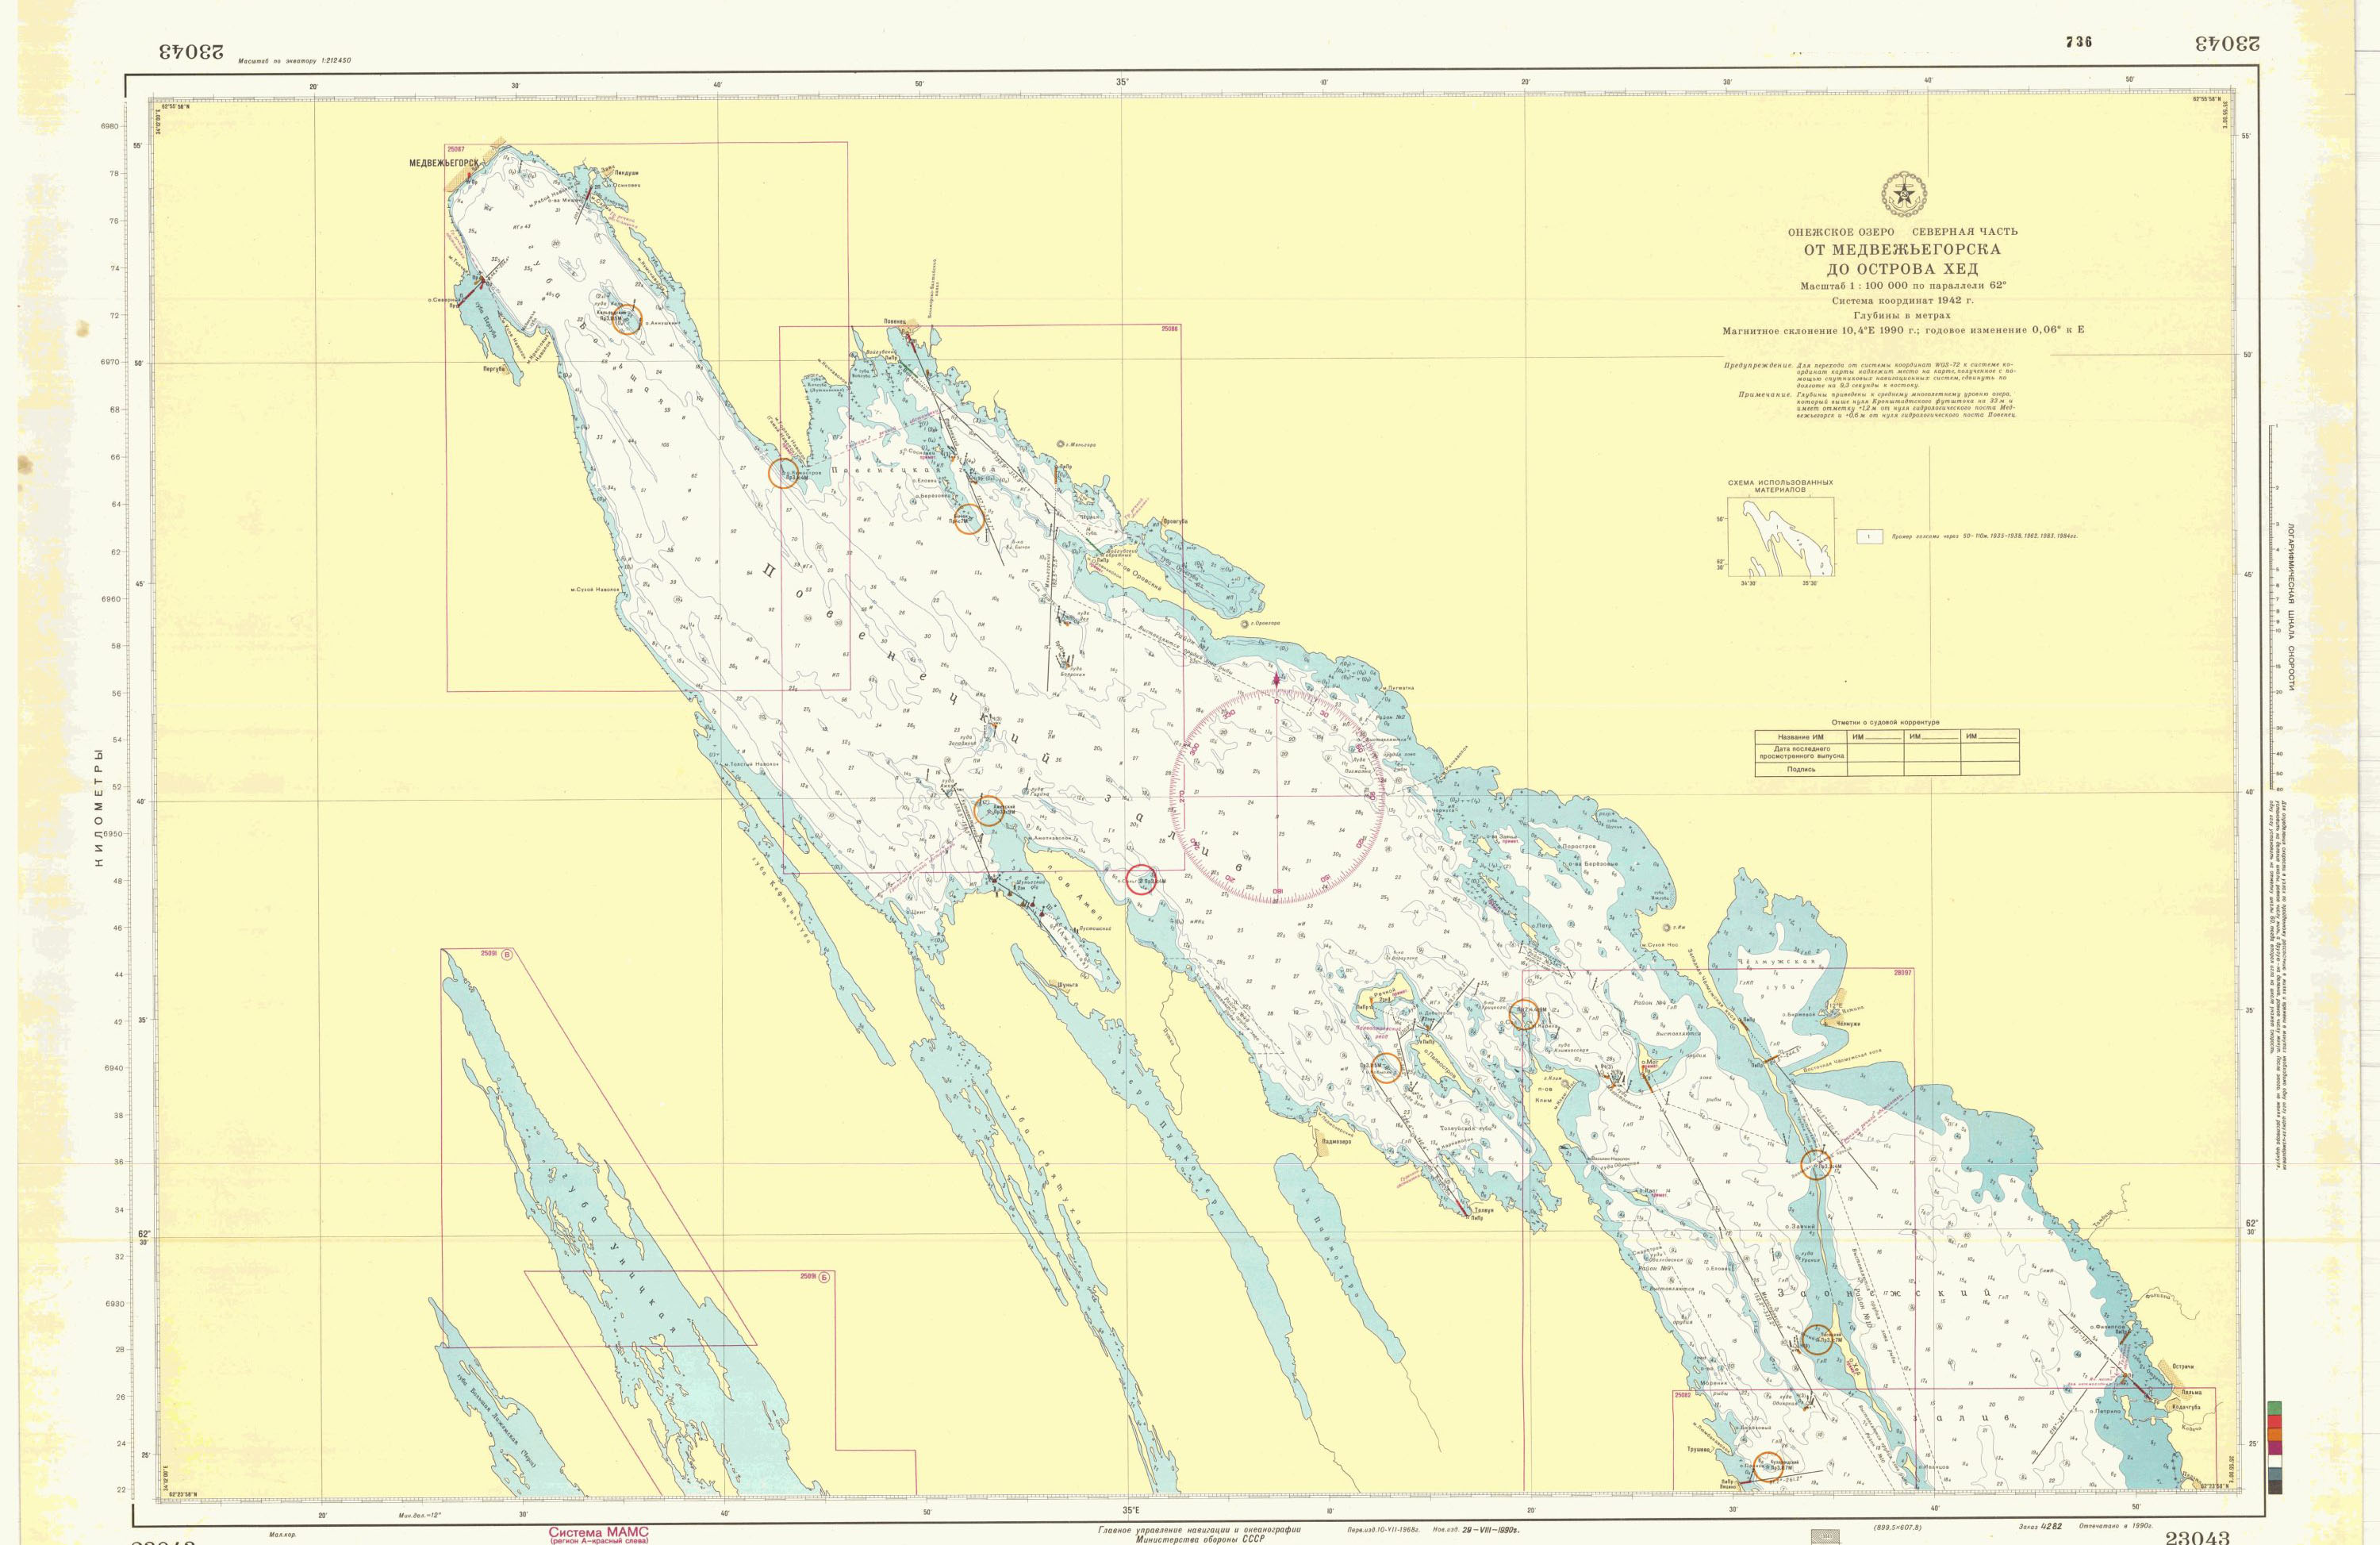 Части онежского озера. Карта глубин Онежского озера Повенецкий залив. Карта Повенецкого залива Онежского озера. Карта глубин Онего Медвежьегорск. Карта глубин озера озеро Онега.